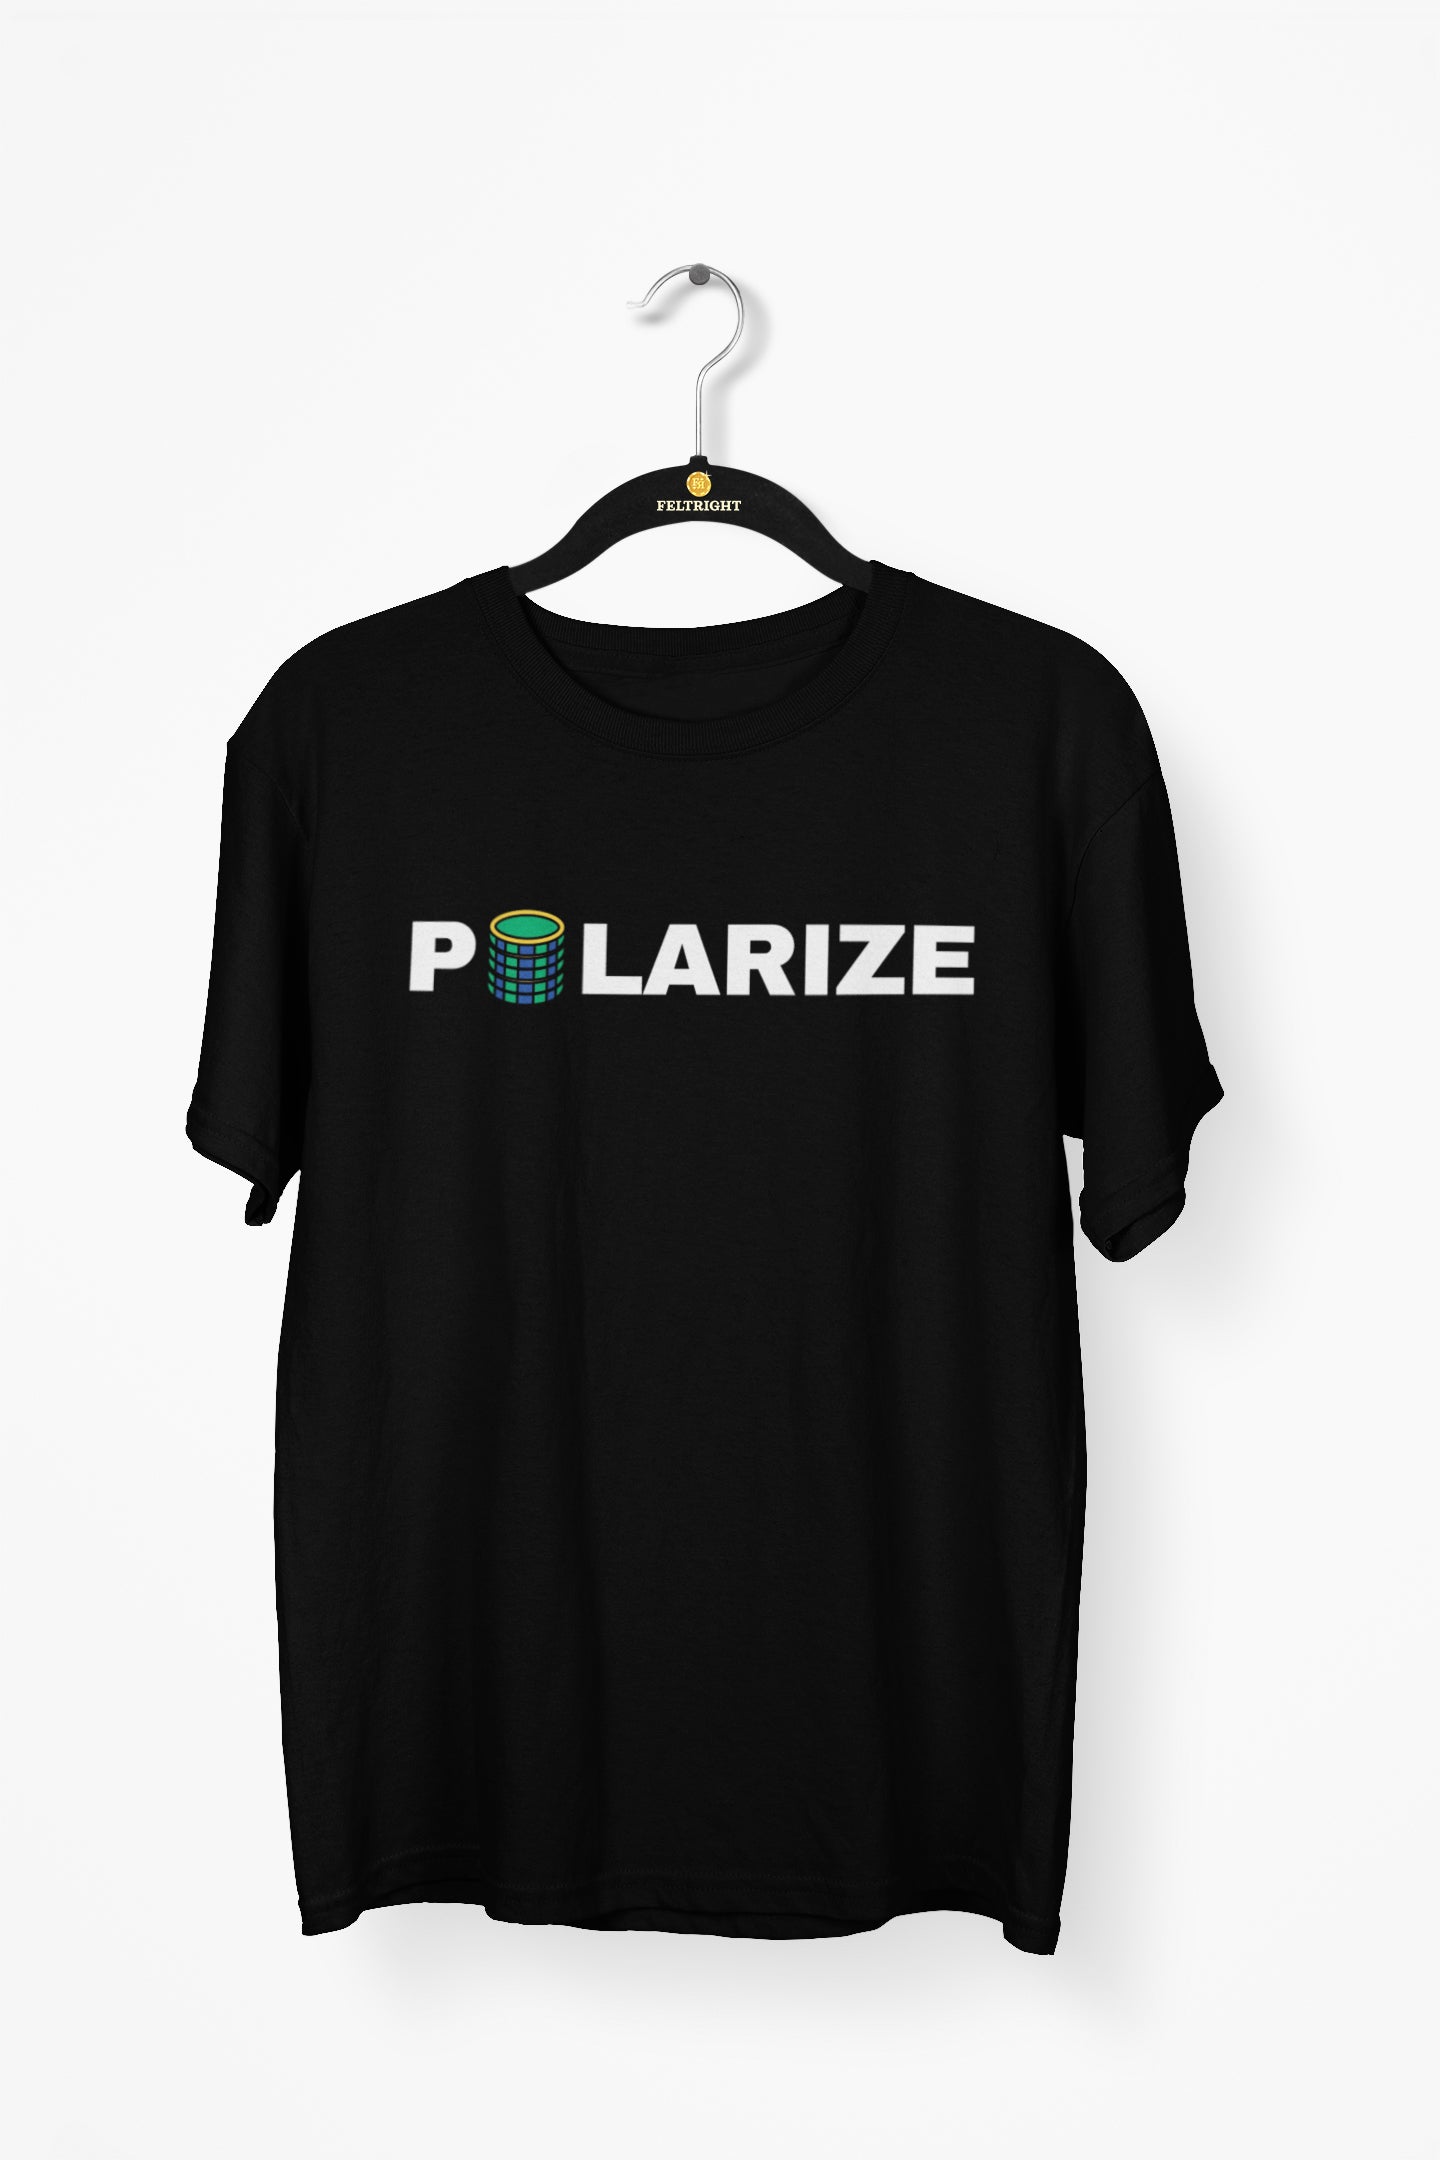 Polarize Poker Tshirt